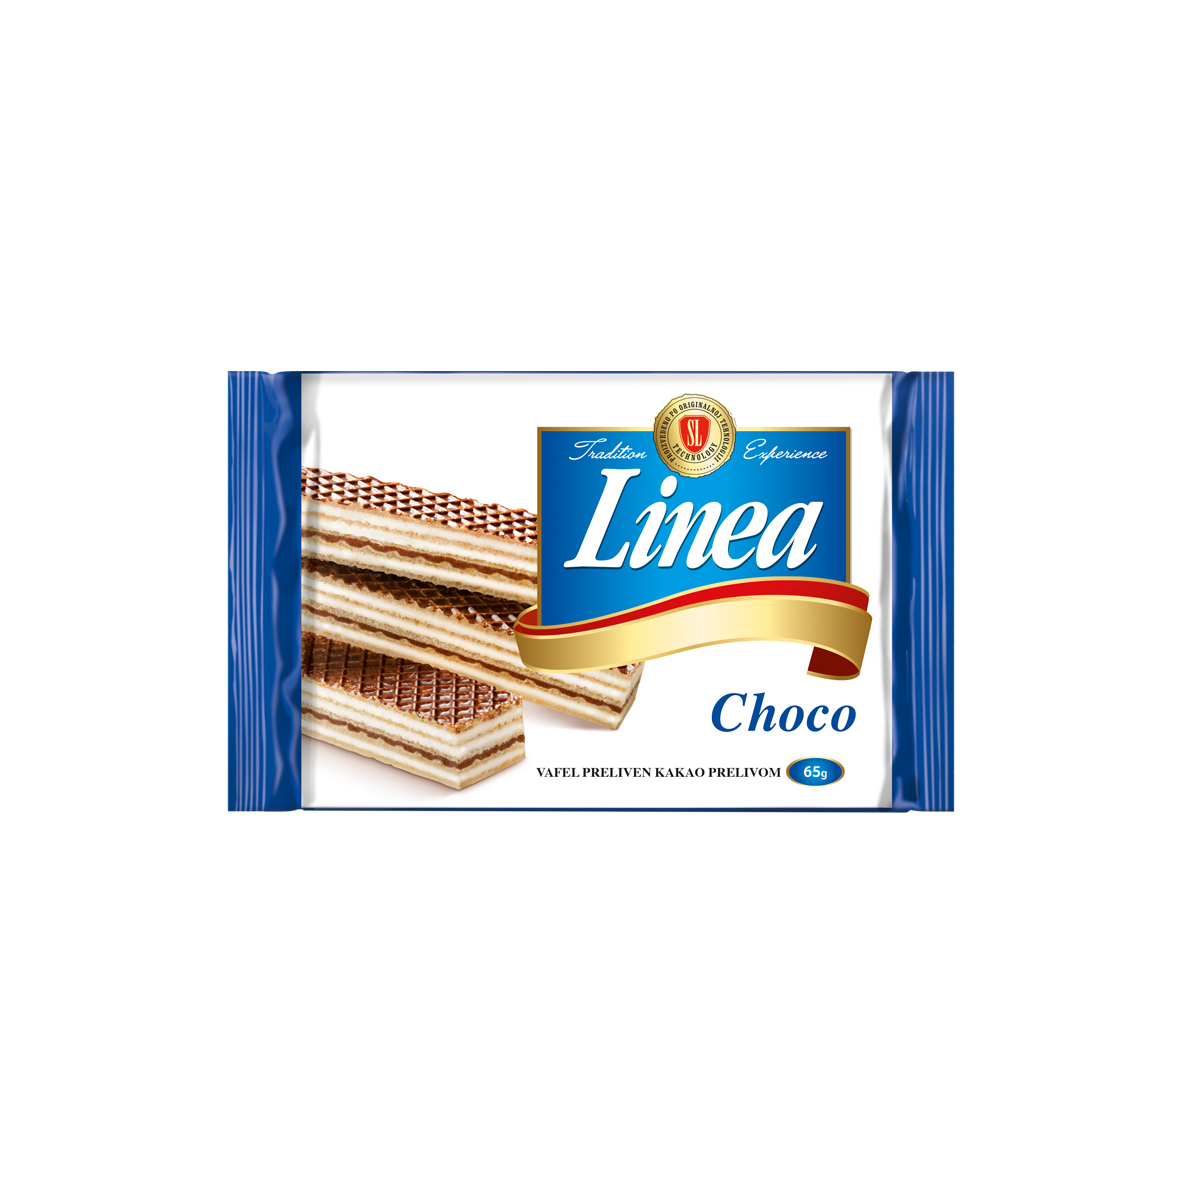 Linea choco wafers 65g